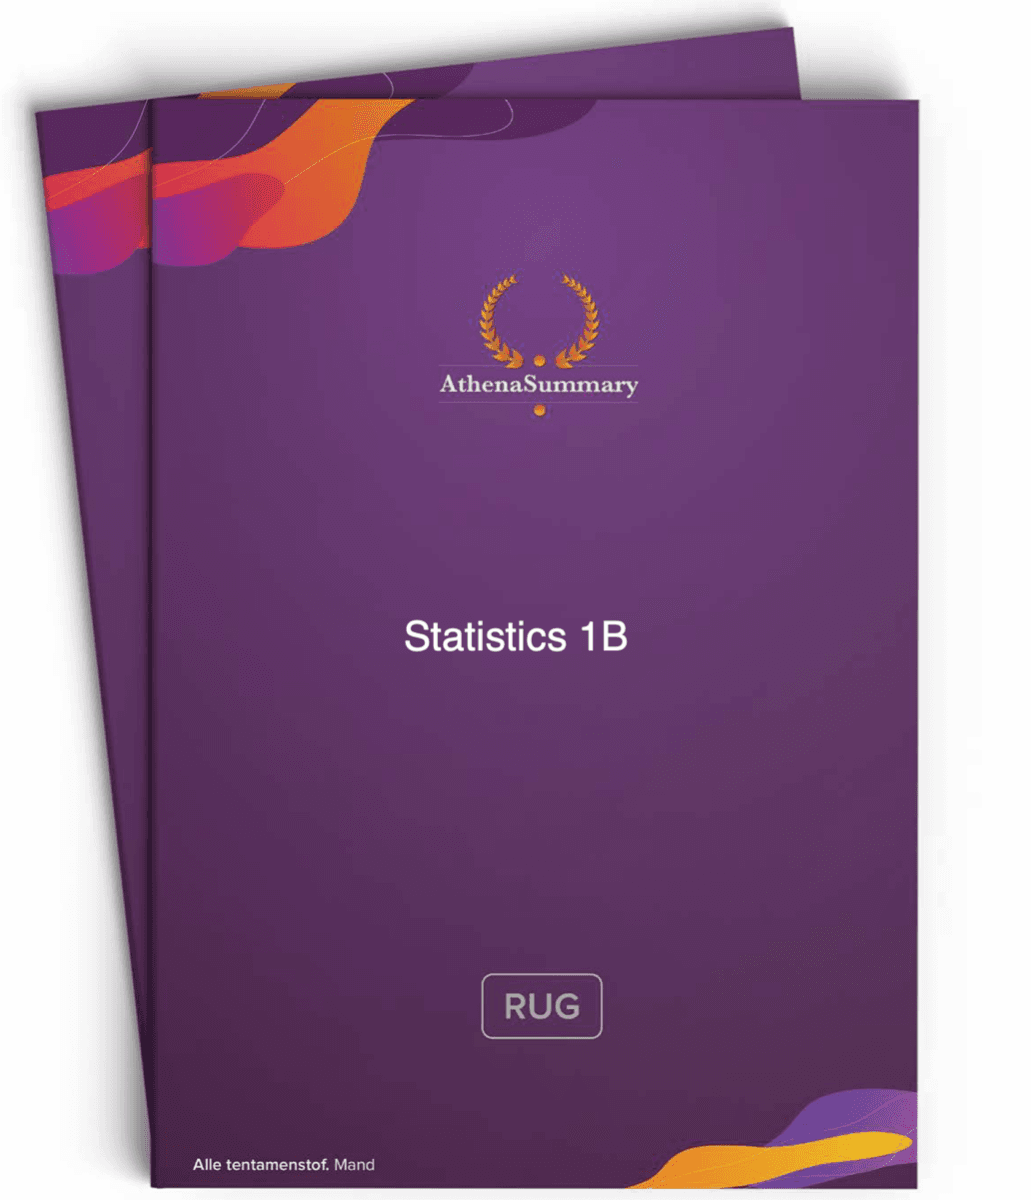 Literature summary: Statistics I B